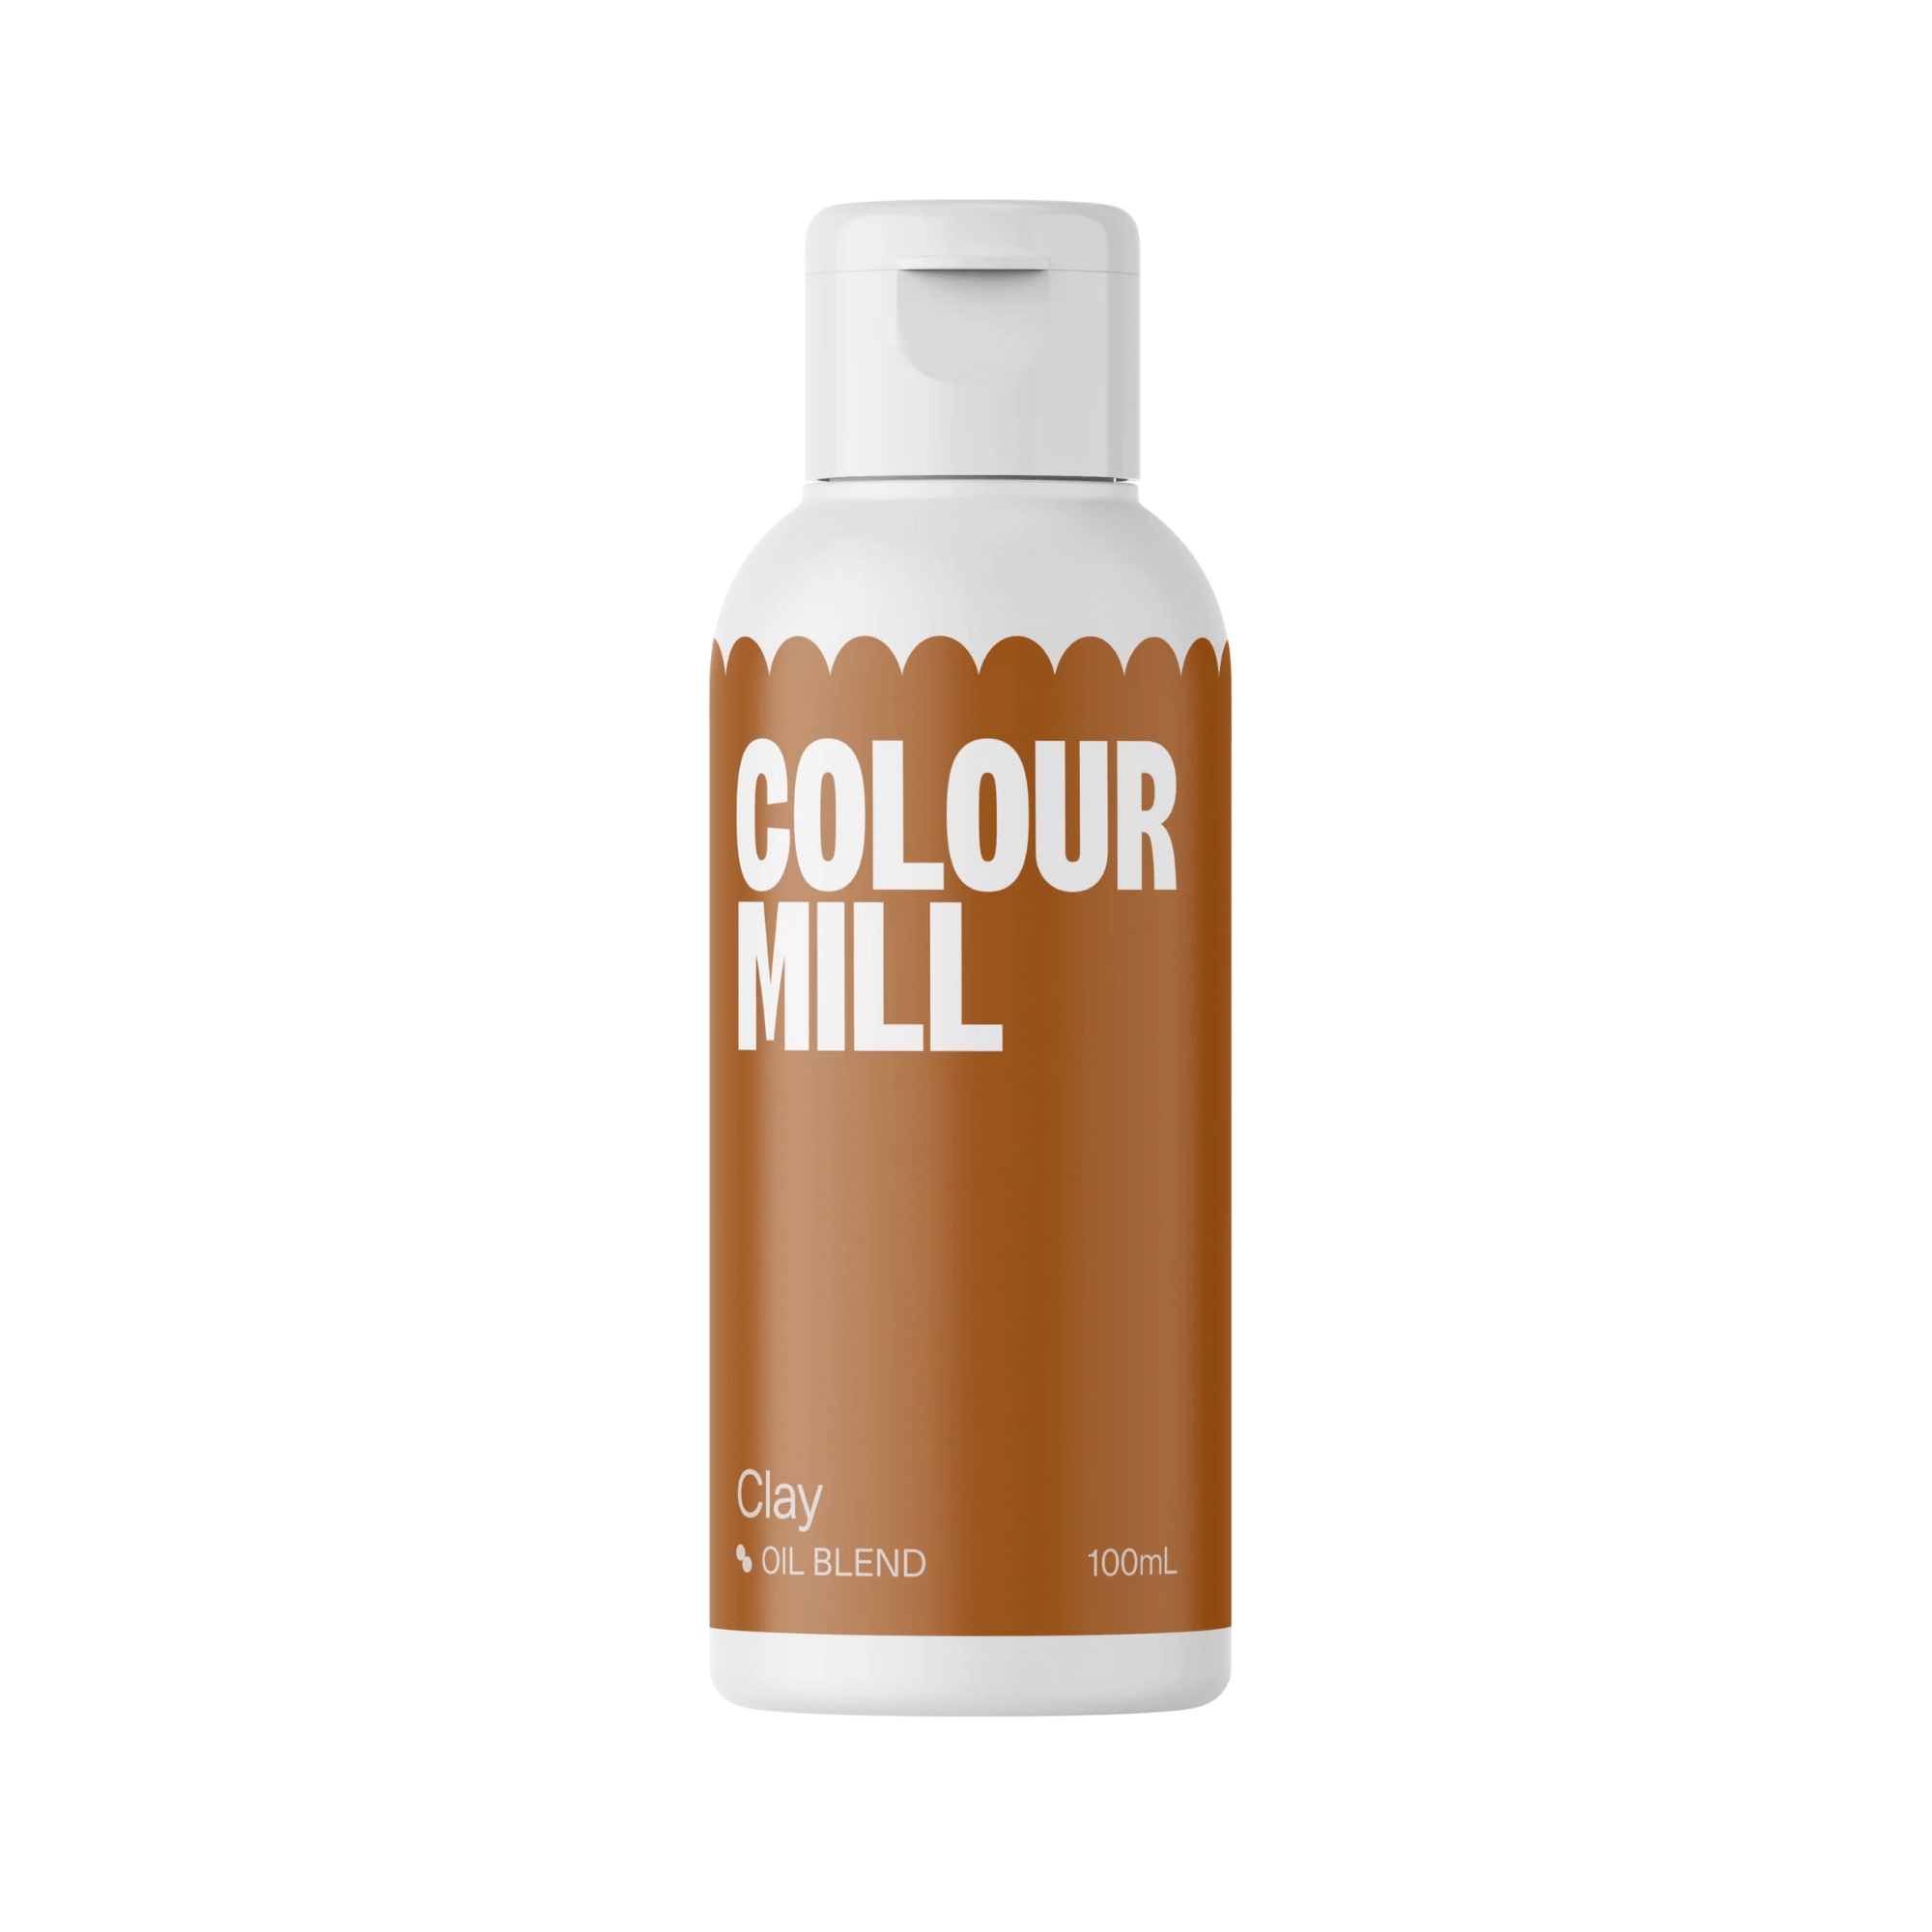 Happy Sprinkles Streusel 100ml Colour Mill Clay - Oil Blend